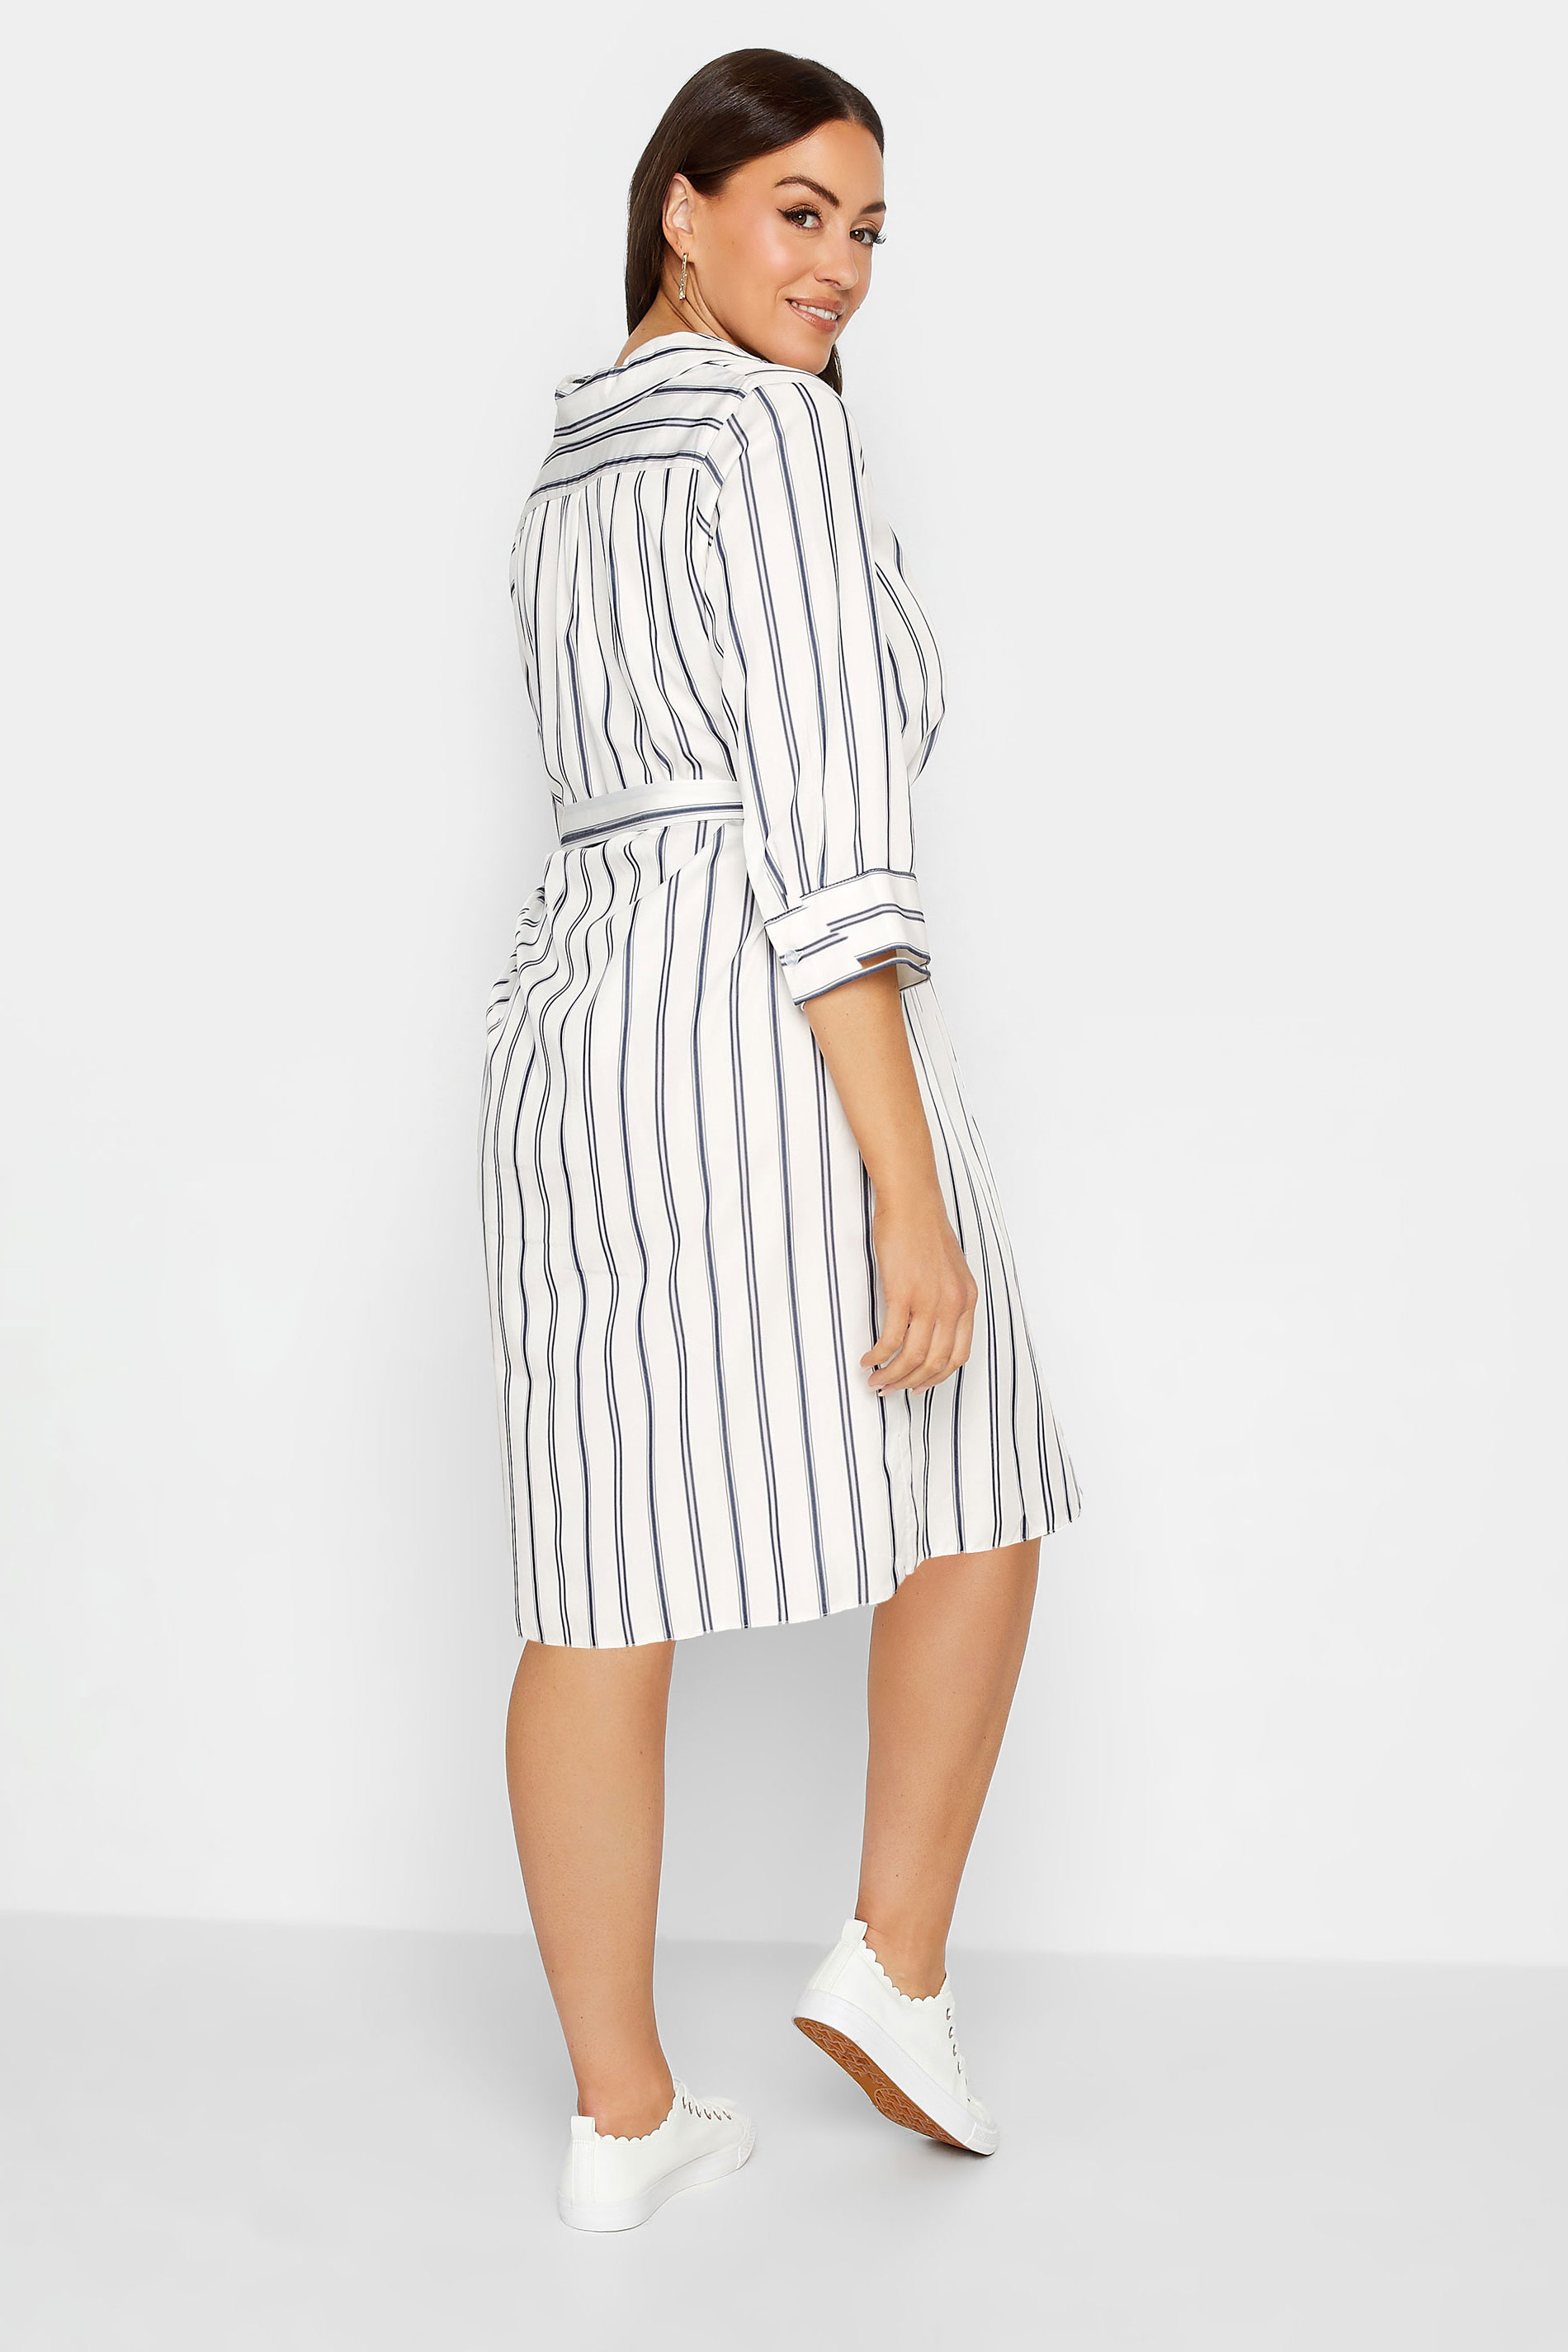 M&Co White & Navy Blue Stripe Print Tie Waist Tunic Shirt Dress | M&Co 3